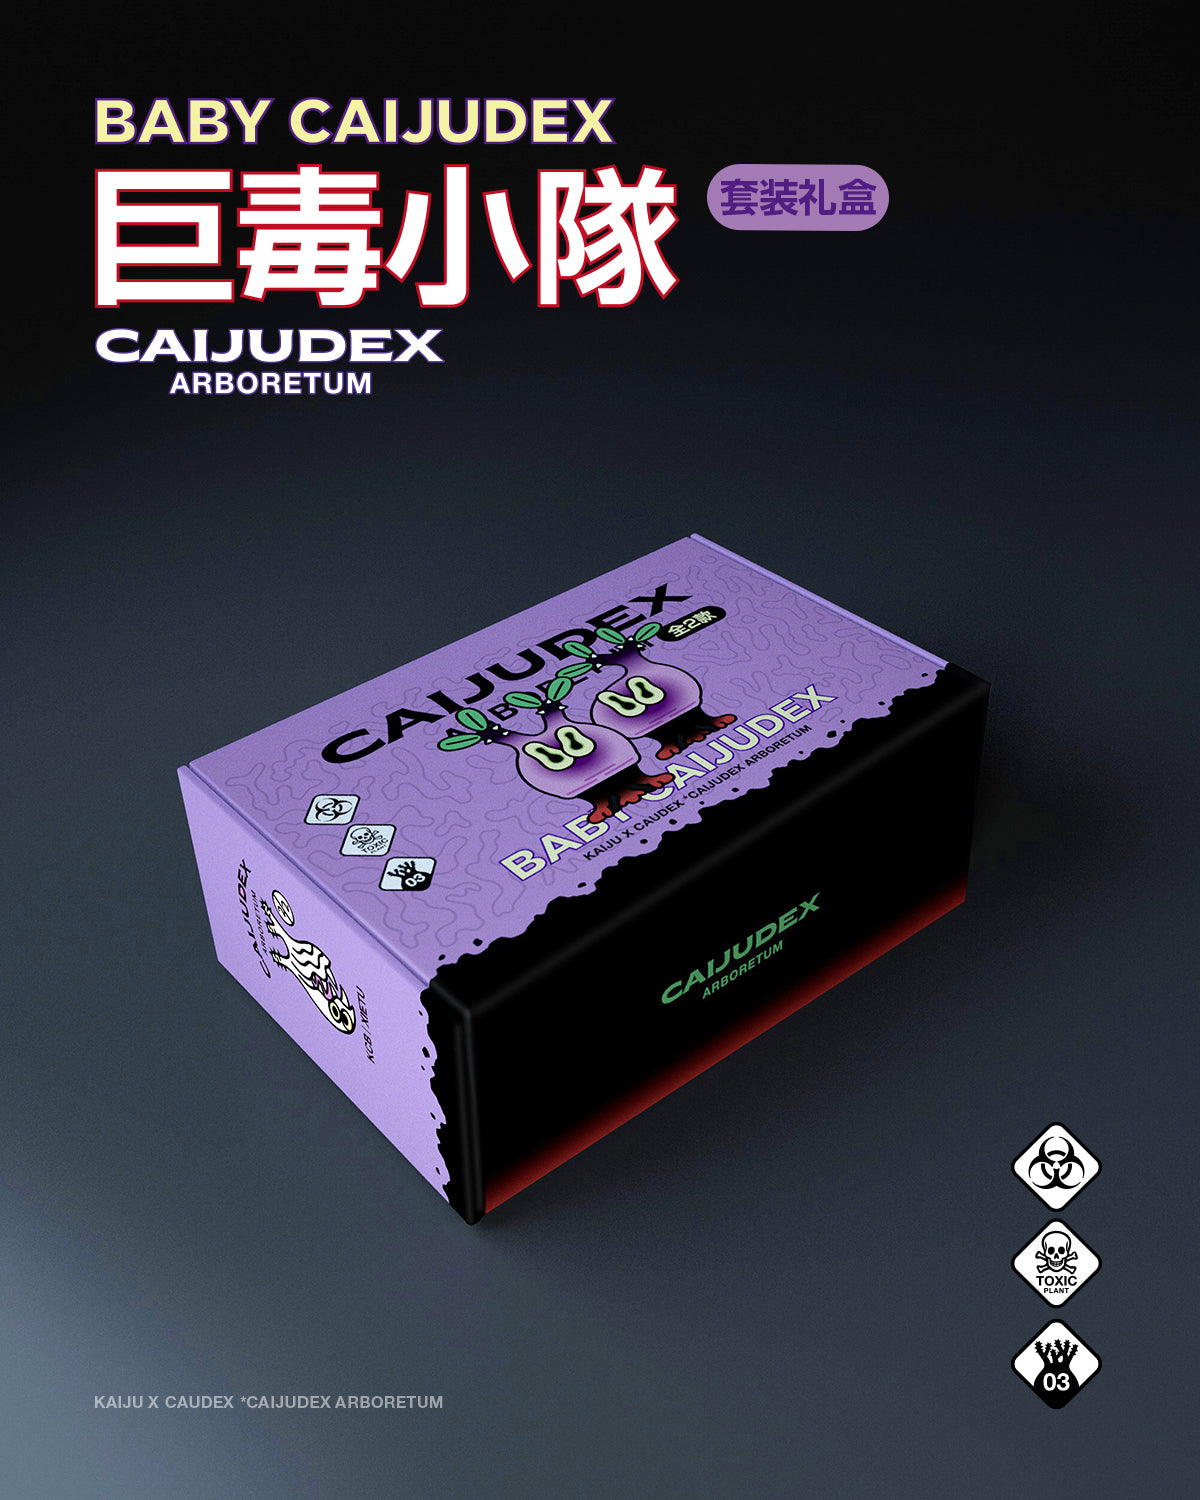 CAIJUDEX ARBORETUM - Toxic plant team by XIETU x KCB